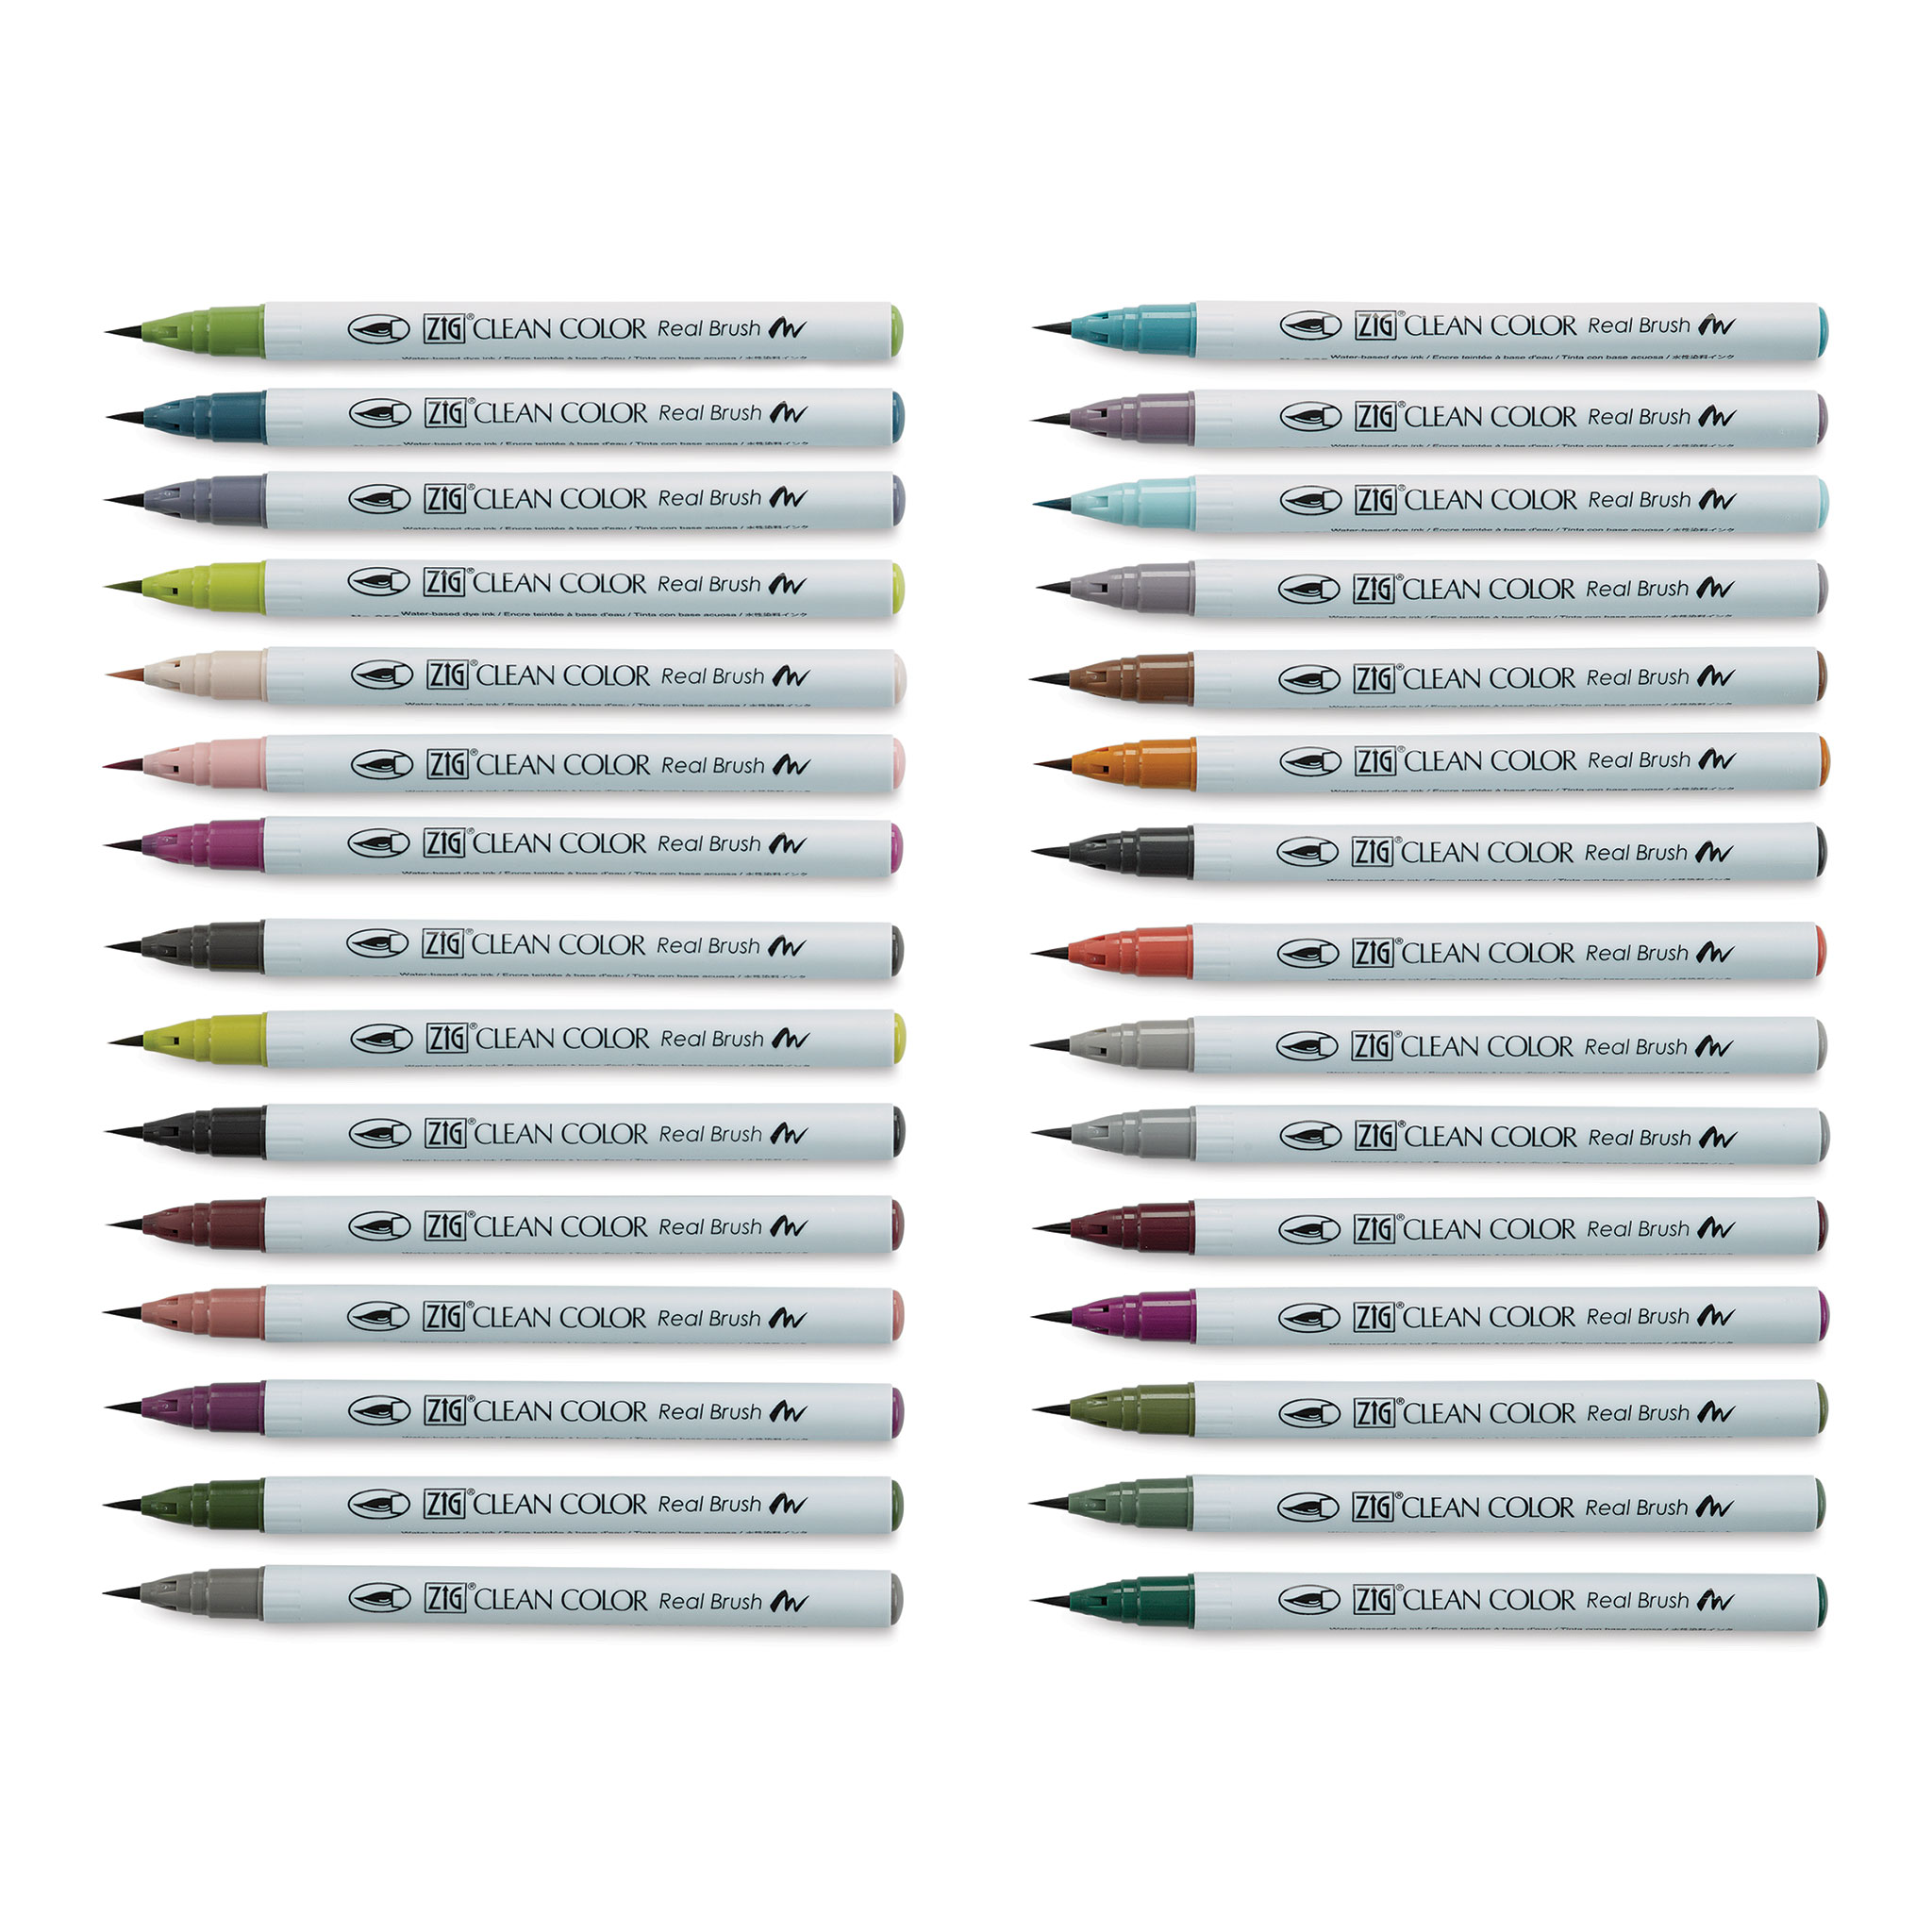 Kuretake Zig Clean Color Real Brush Pens - Assorted Colors, Set of 30